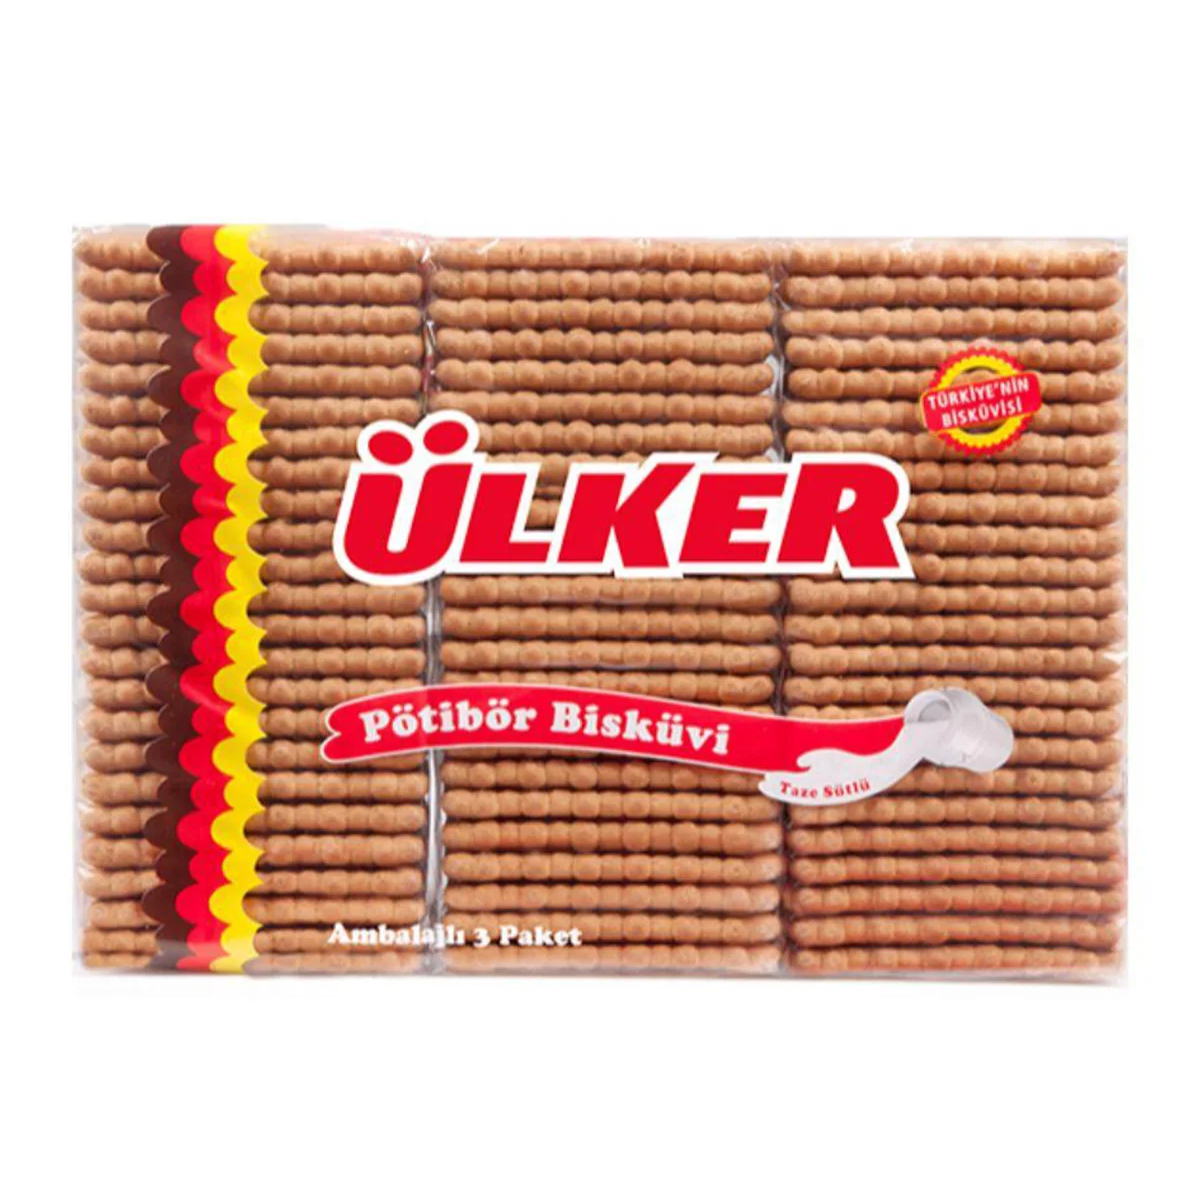 Печенье Ulker Petit Beurre, 450 г печенье ulker petit beurre двойной обжарки 175 г